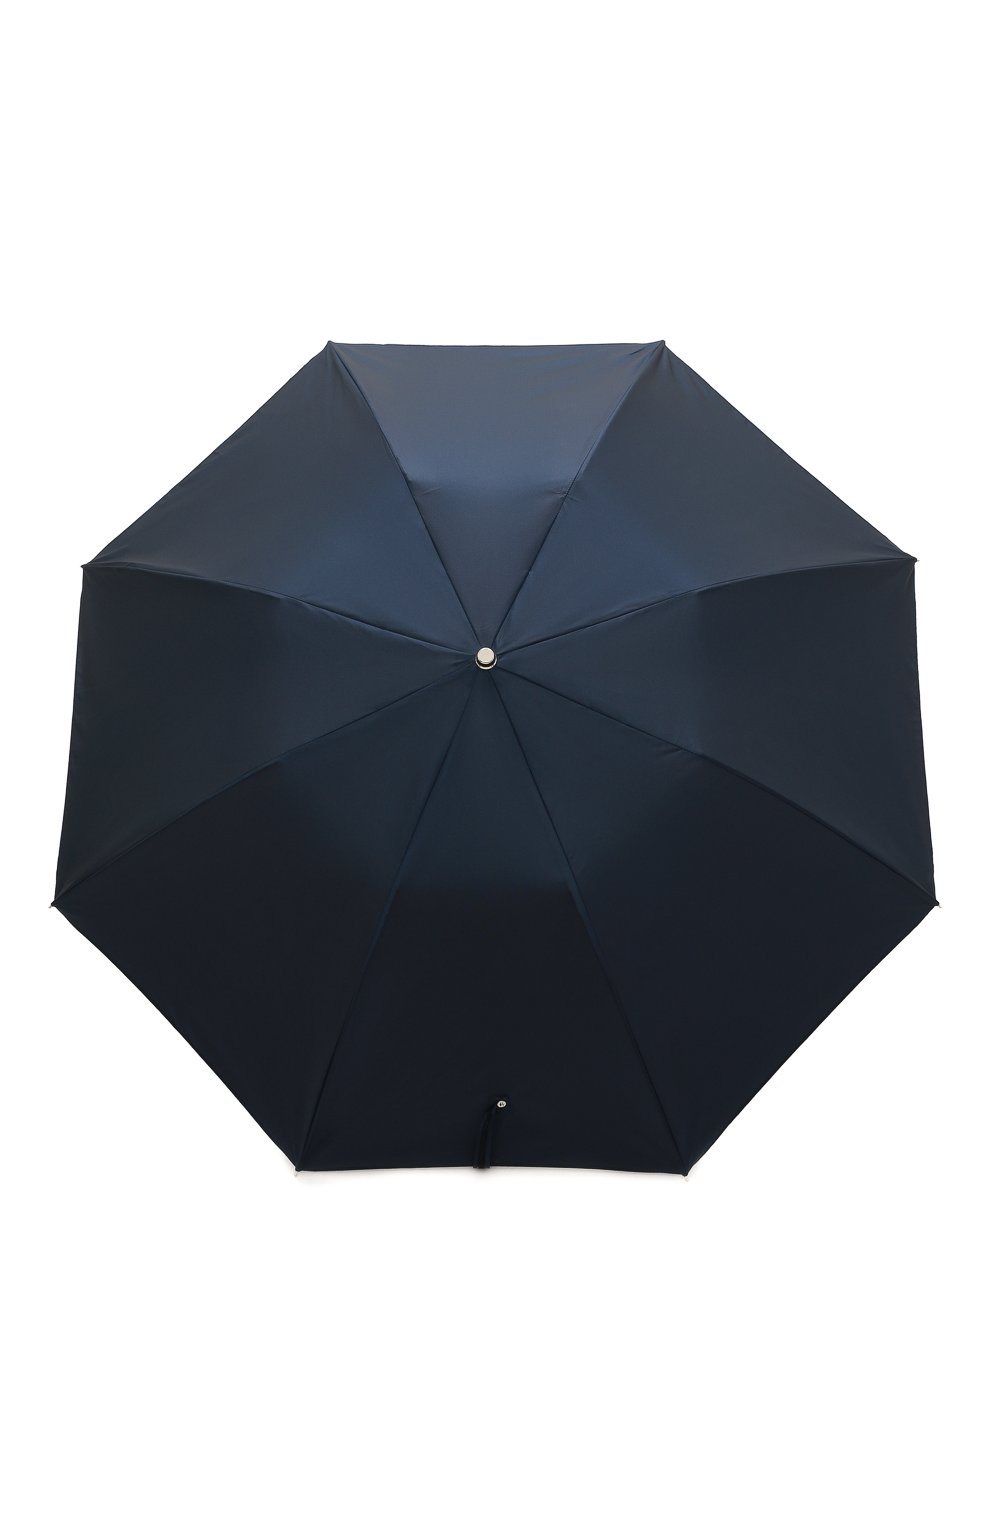 Мужской складной зонт PASOTTI OMBRELLI темно-синего цвета, арт. 64S/RAS0 0XF0RD/14/N49 | Фото 1 (Материал: Текстиль, Синтетический материал, Металл; Статус проверки: Проверено, Проверена категория)